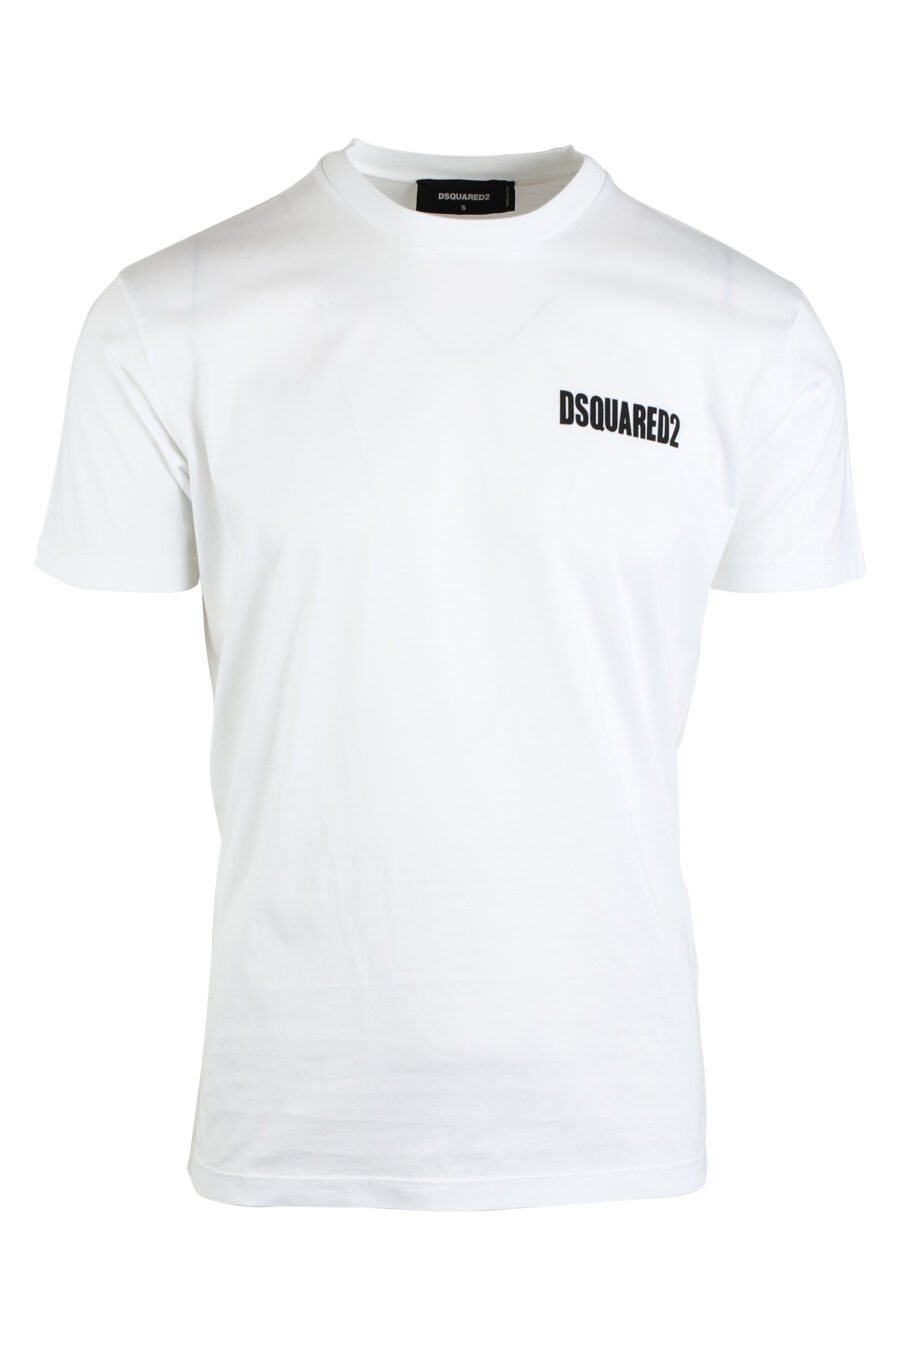 Weißes T-Shirt mit schwarzem Minilogo - IMG 0673